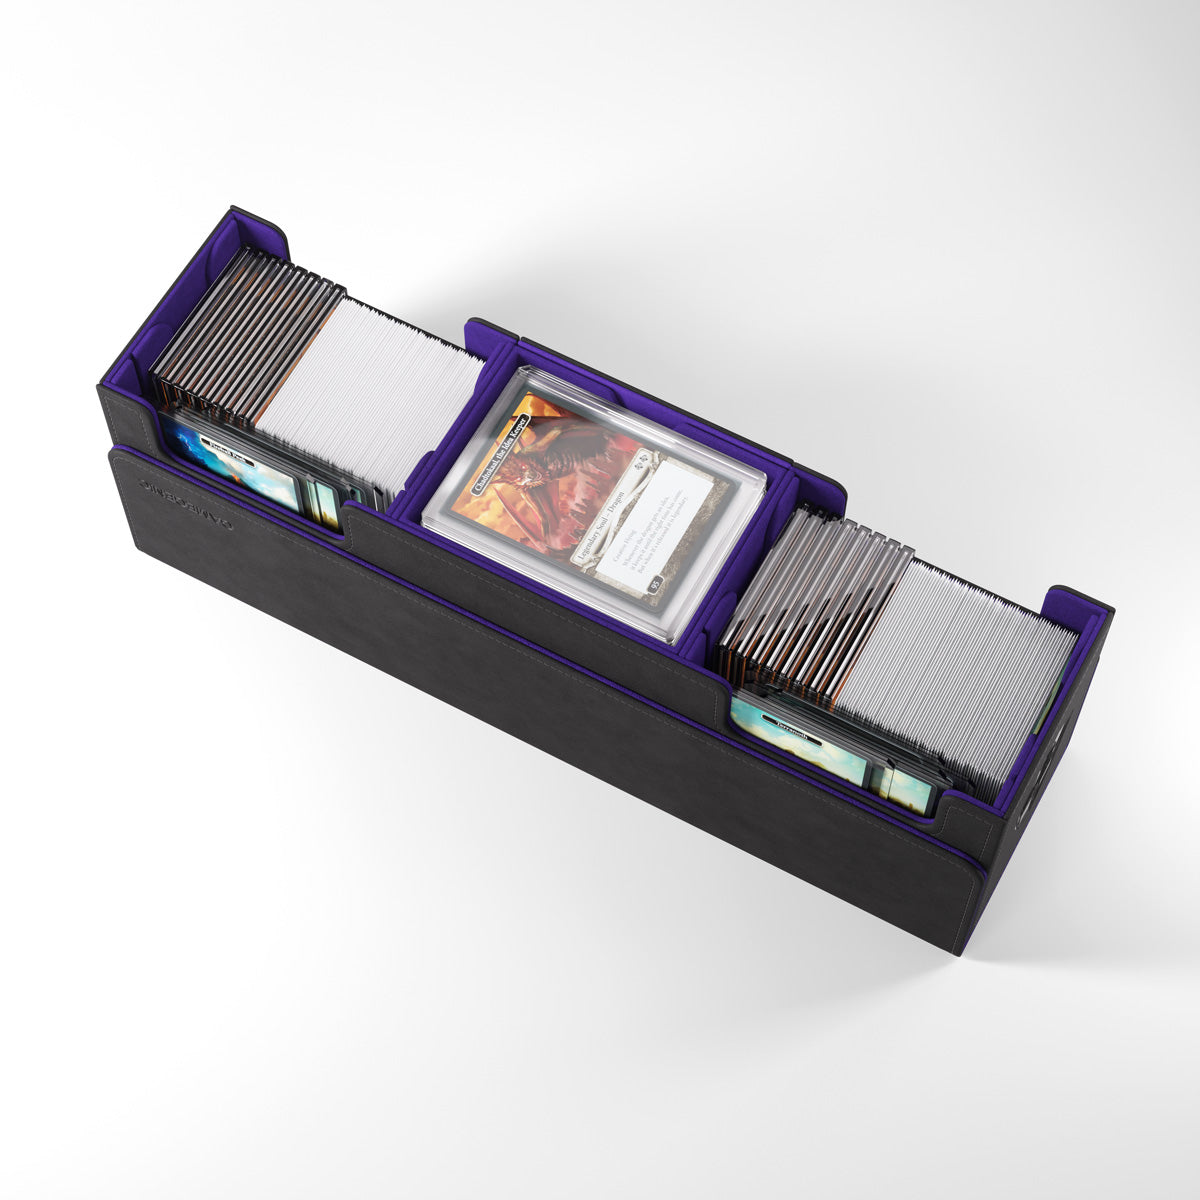 The Academic 266+ XL Convertible Black/Purple Deck Box (266ct)